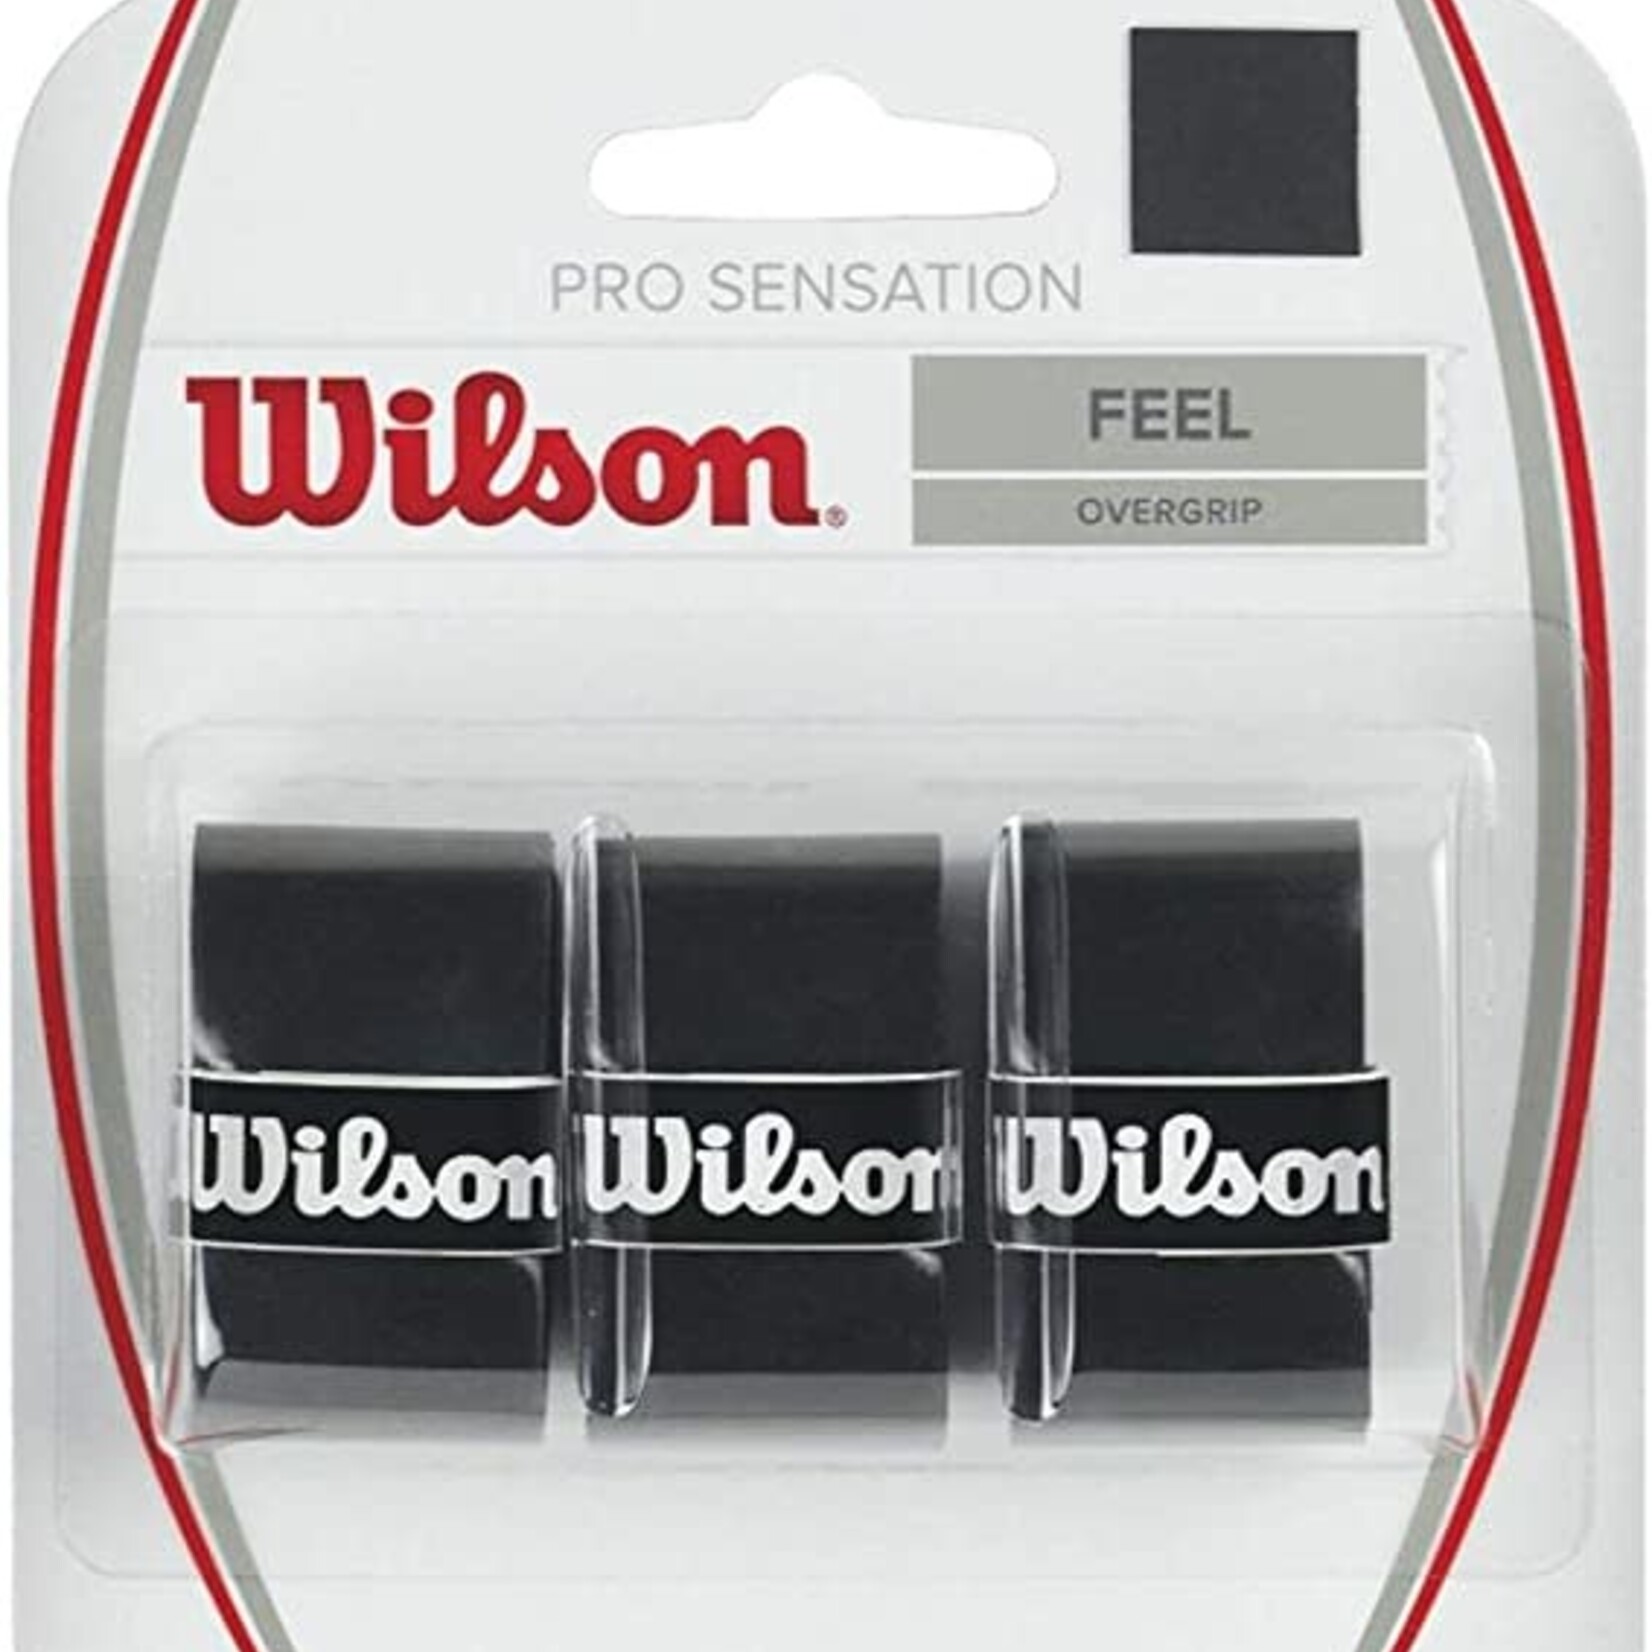 Wilson Wilson Tennis Racquet Grip, Pro Overgrip Sensation, 3-Pack, Blk